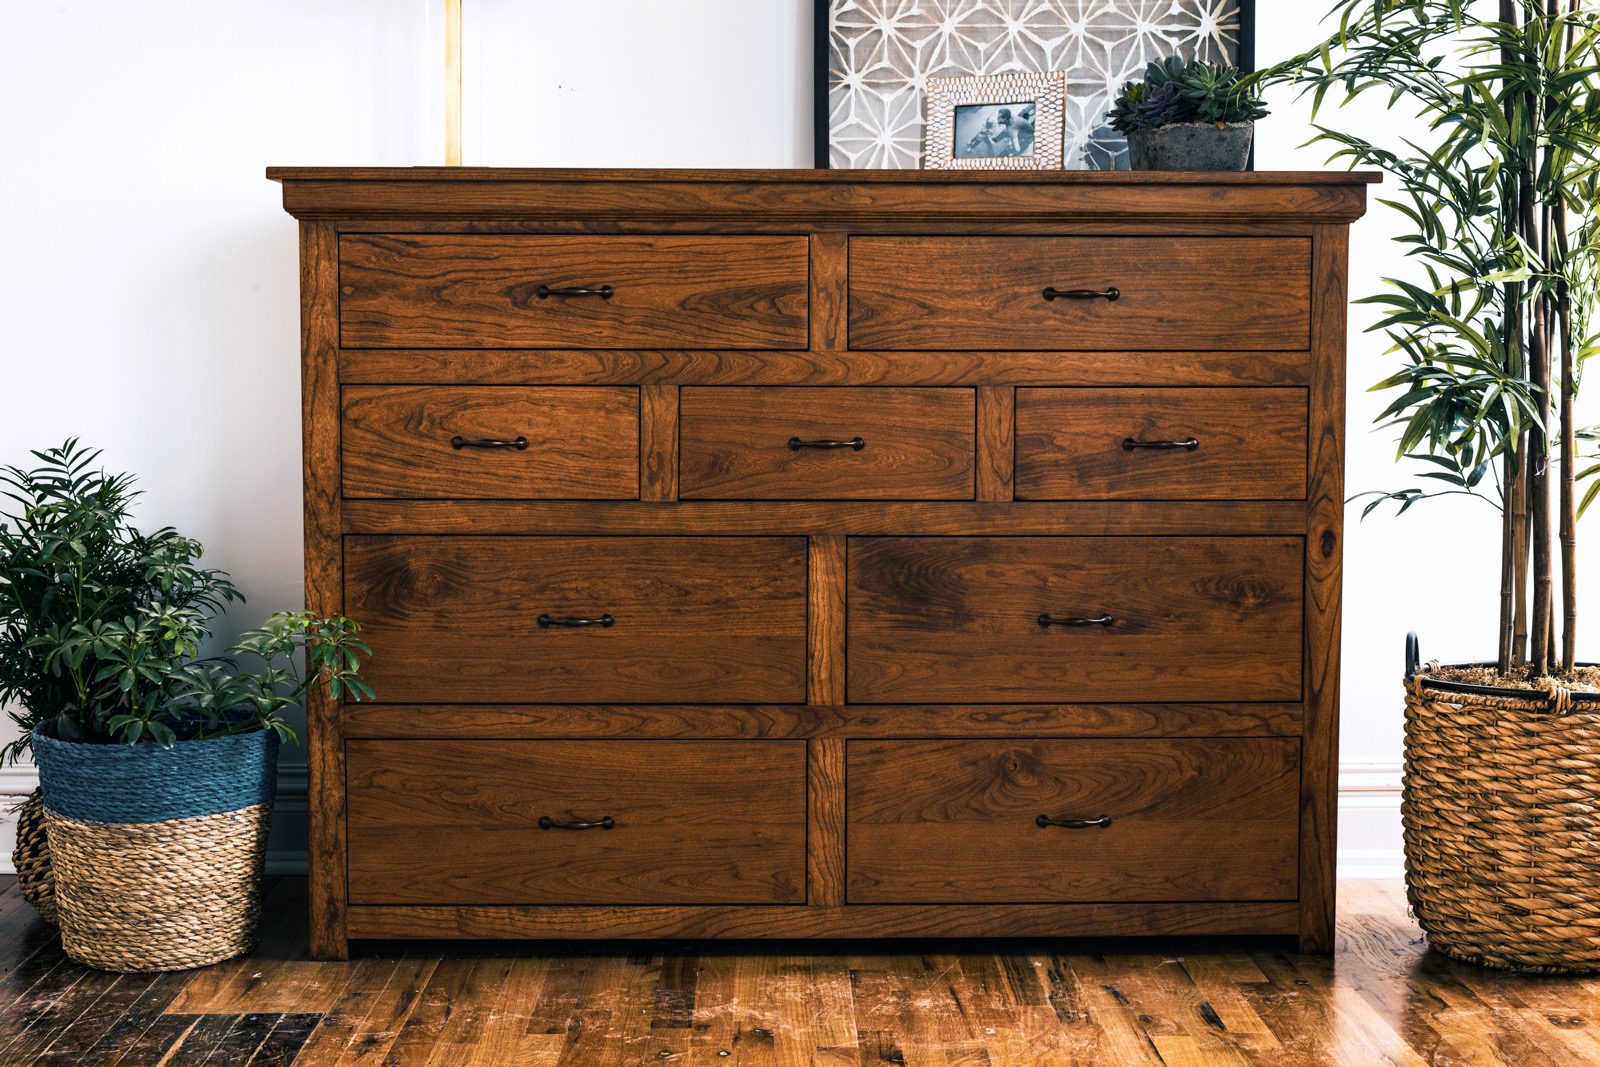 Princeton Dresser | Modern Antique Dressers in Bedroom Furniture and Home D...